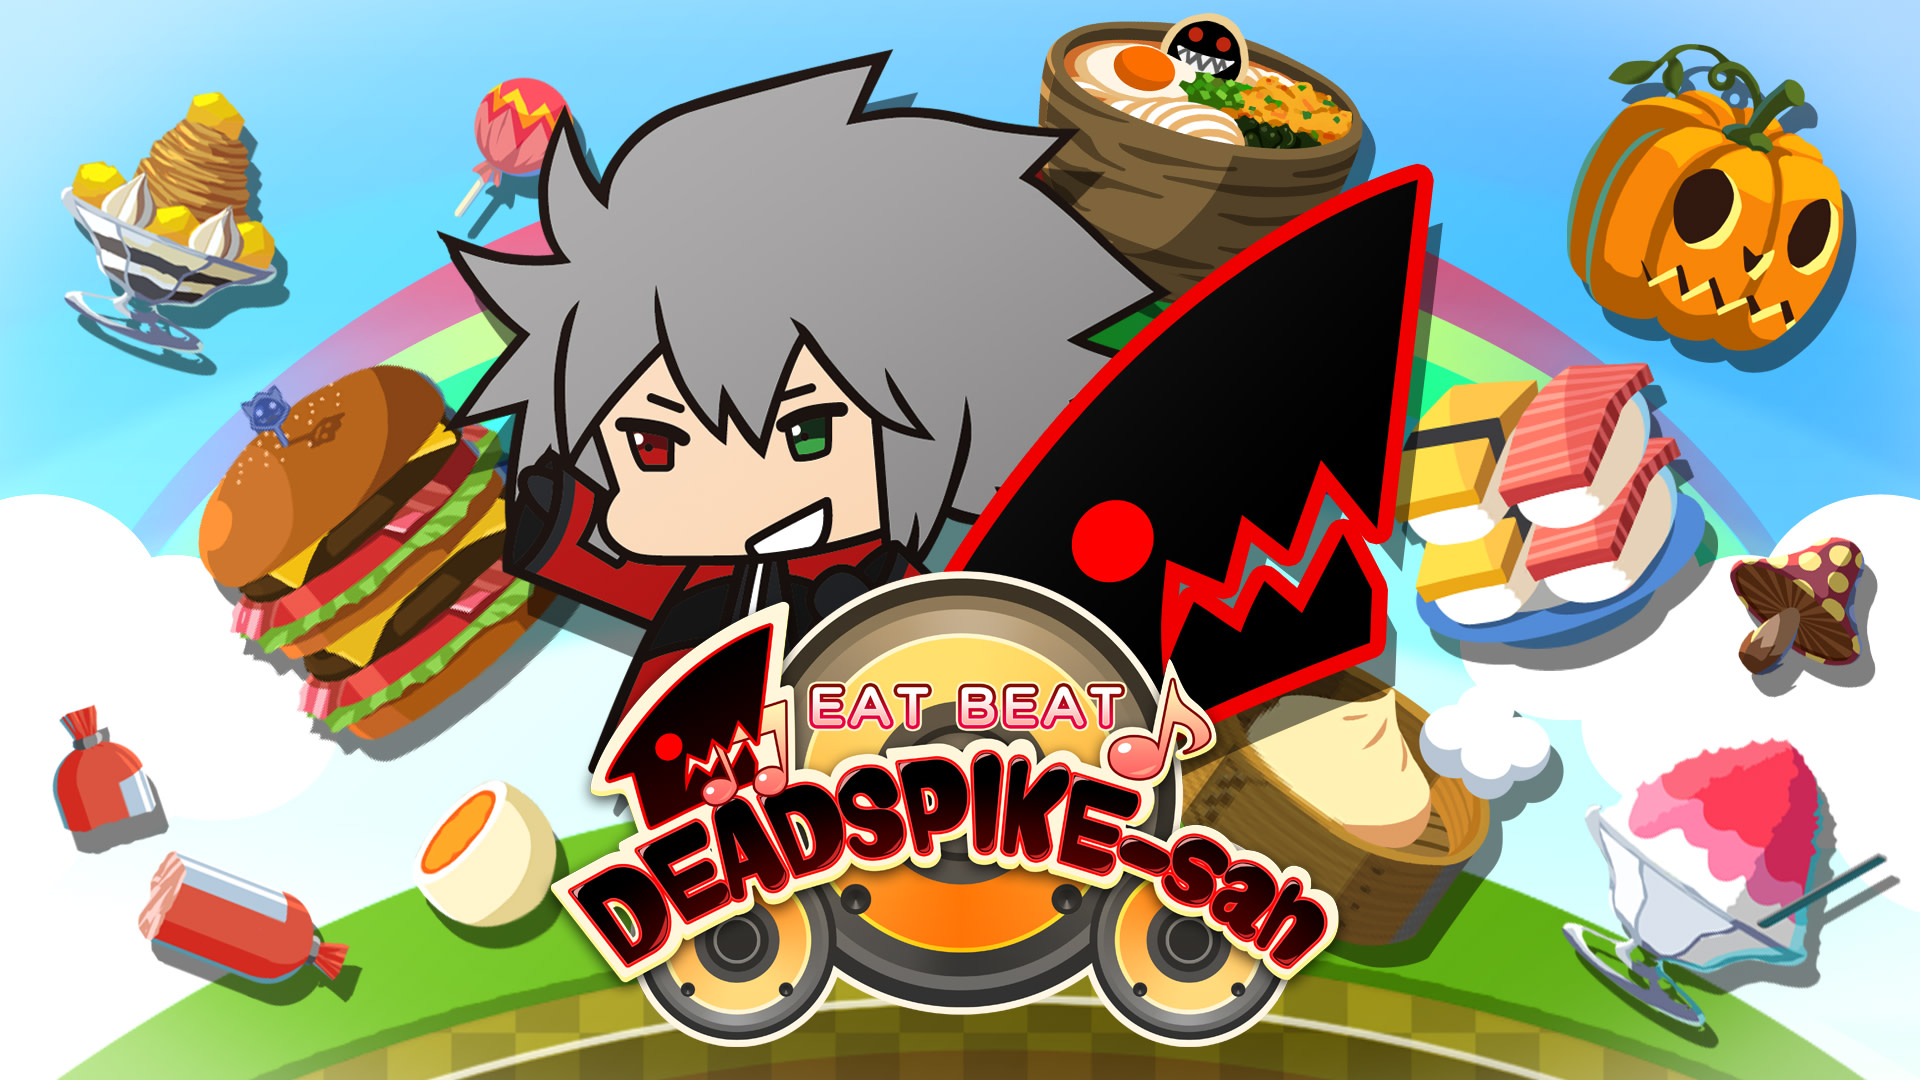 EAT BEAT DEADSPIKE-san